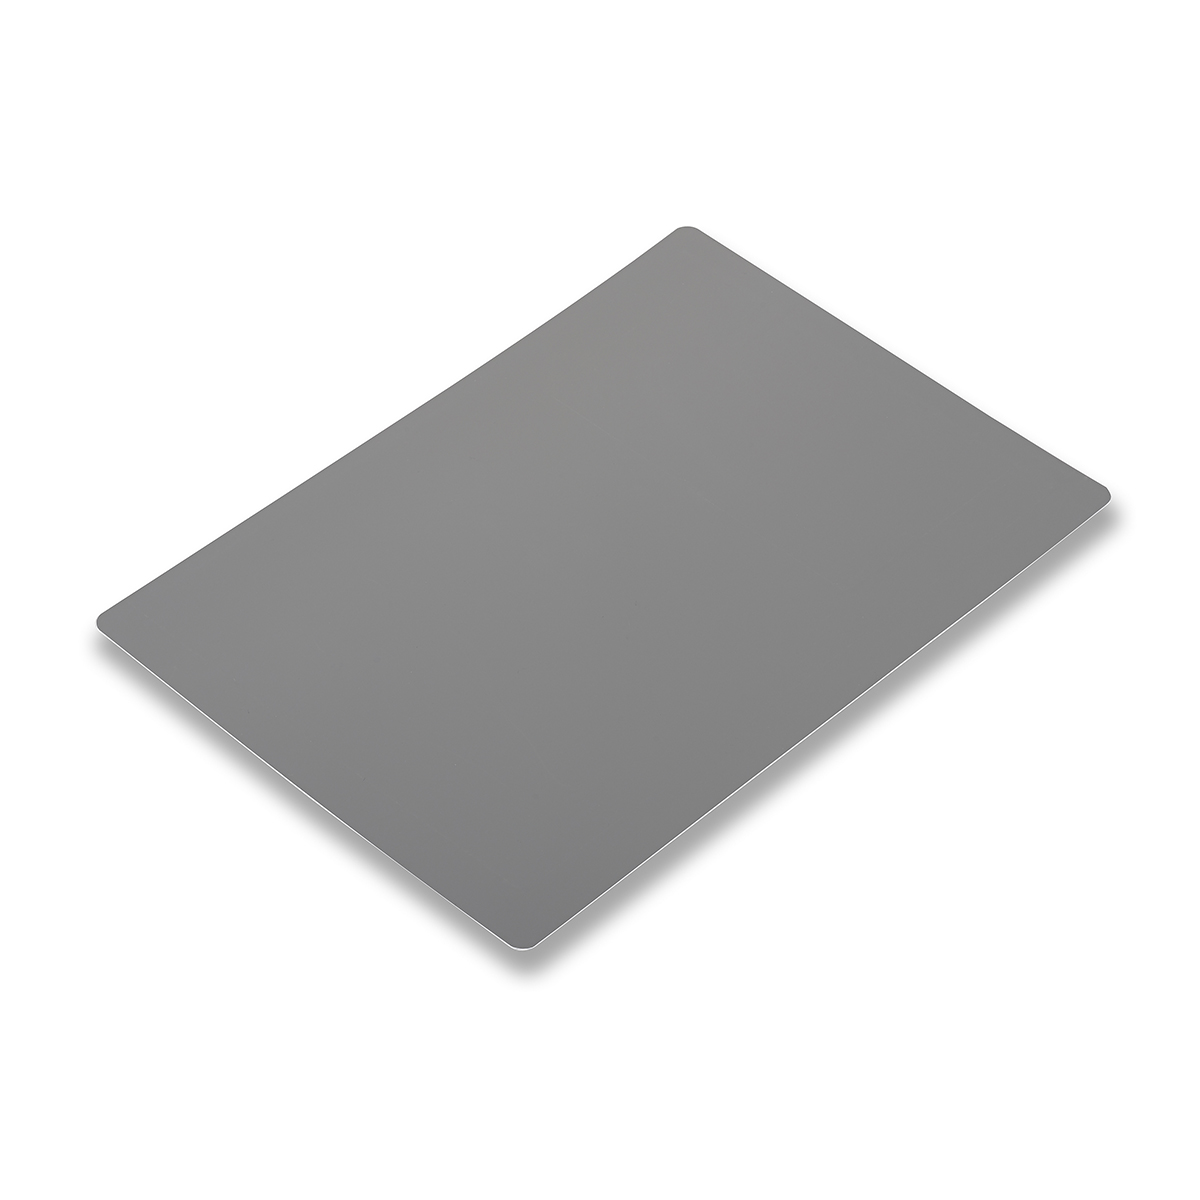 Novoflex Kontrollkarte Grau/Weiß 21x30 cm